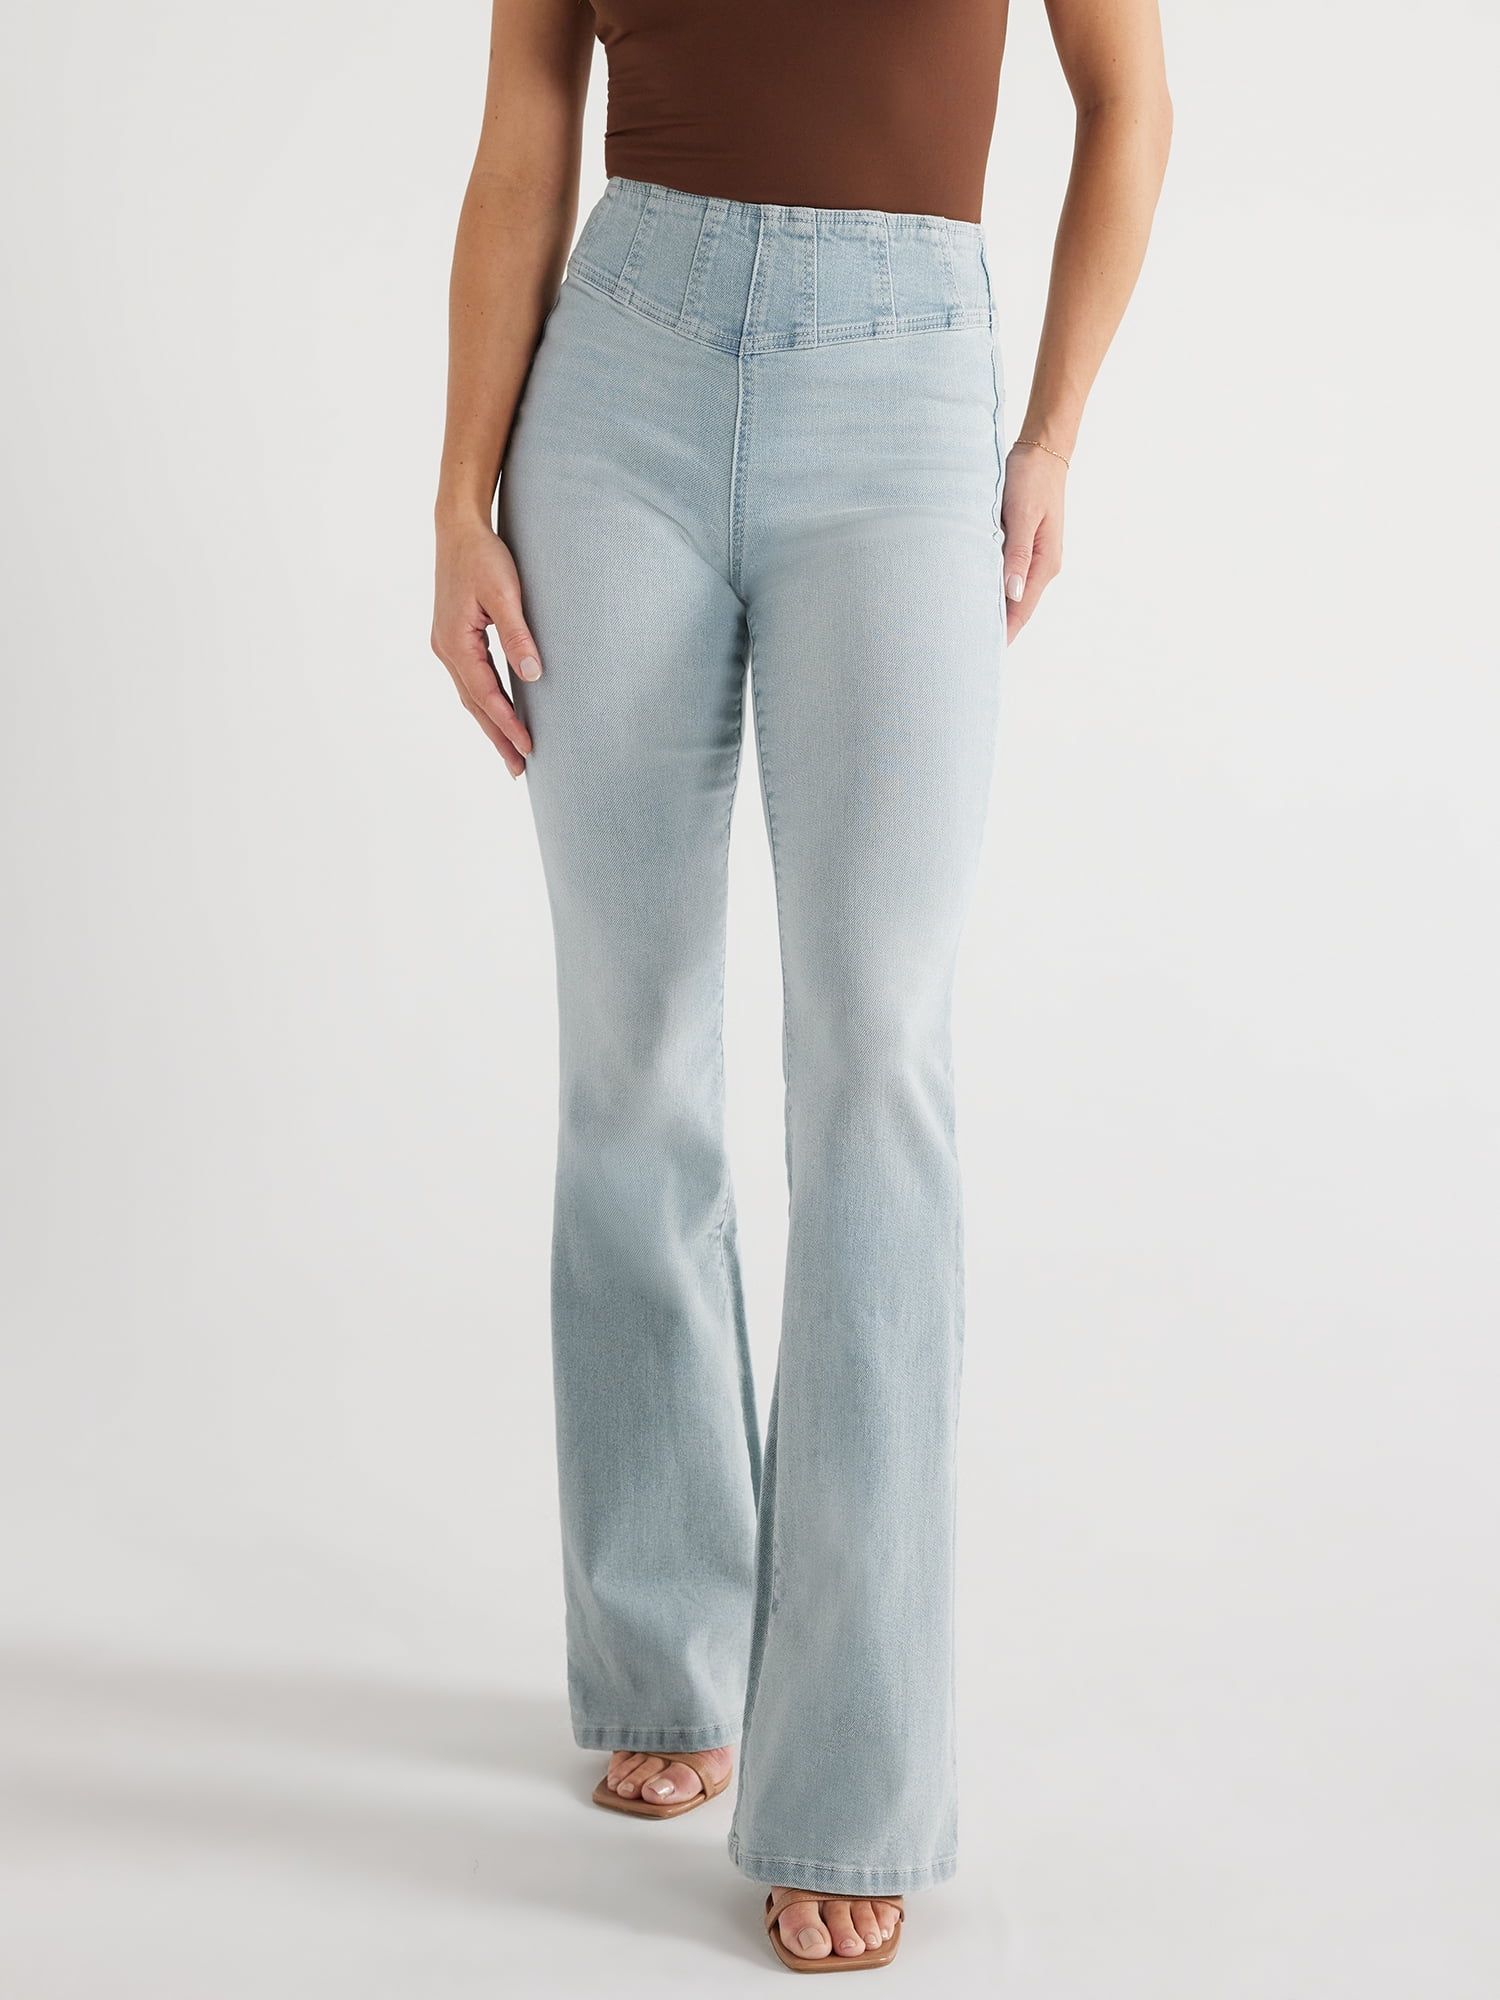 Sofia Jeans Women's Melisa Flare Super High Rise Curve Corset Jeans, 33.5" Inseam, Sizes 0-20 | Walmart (US)